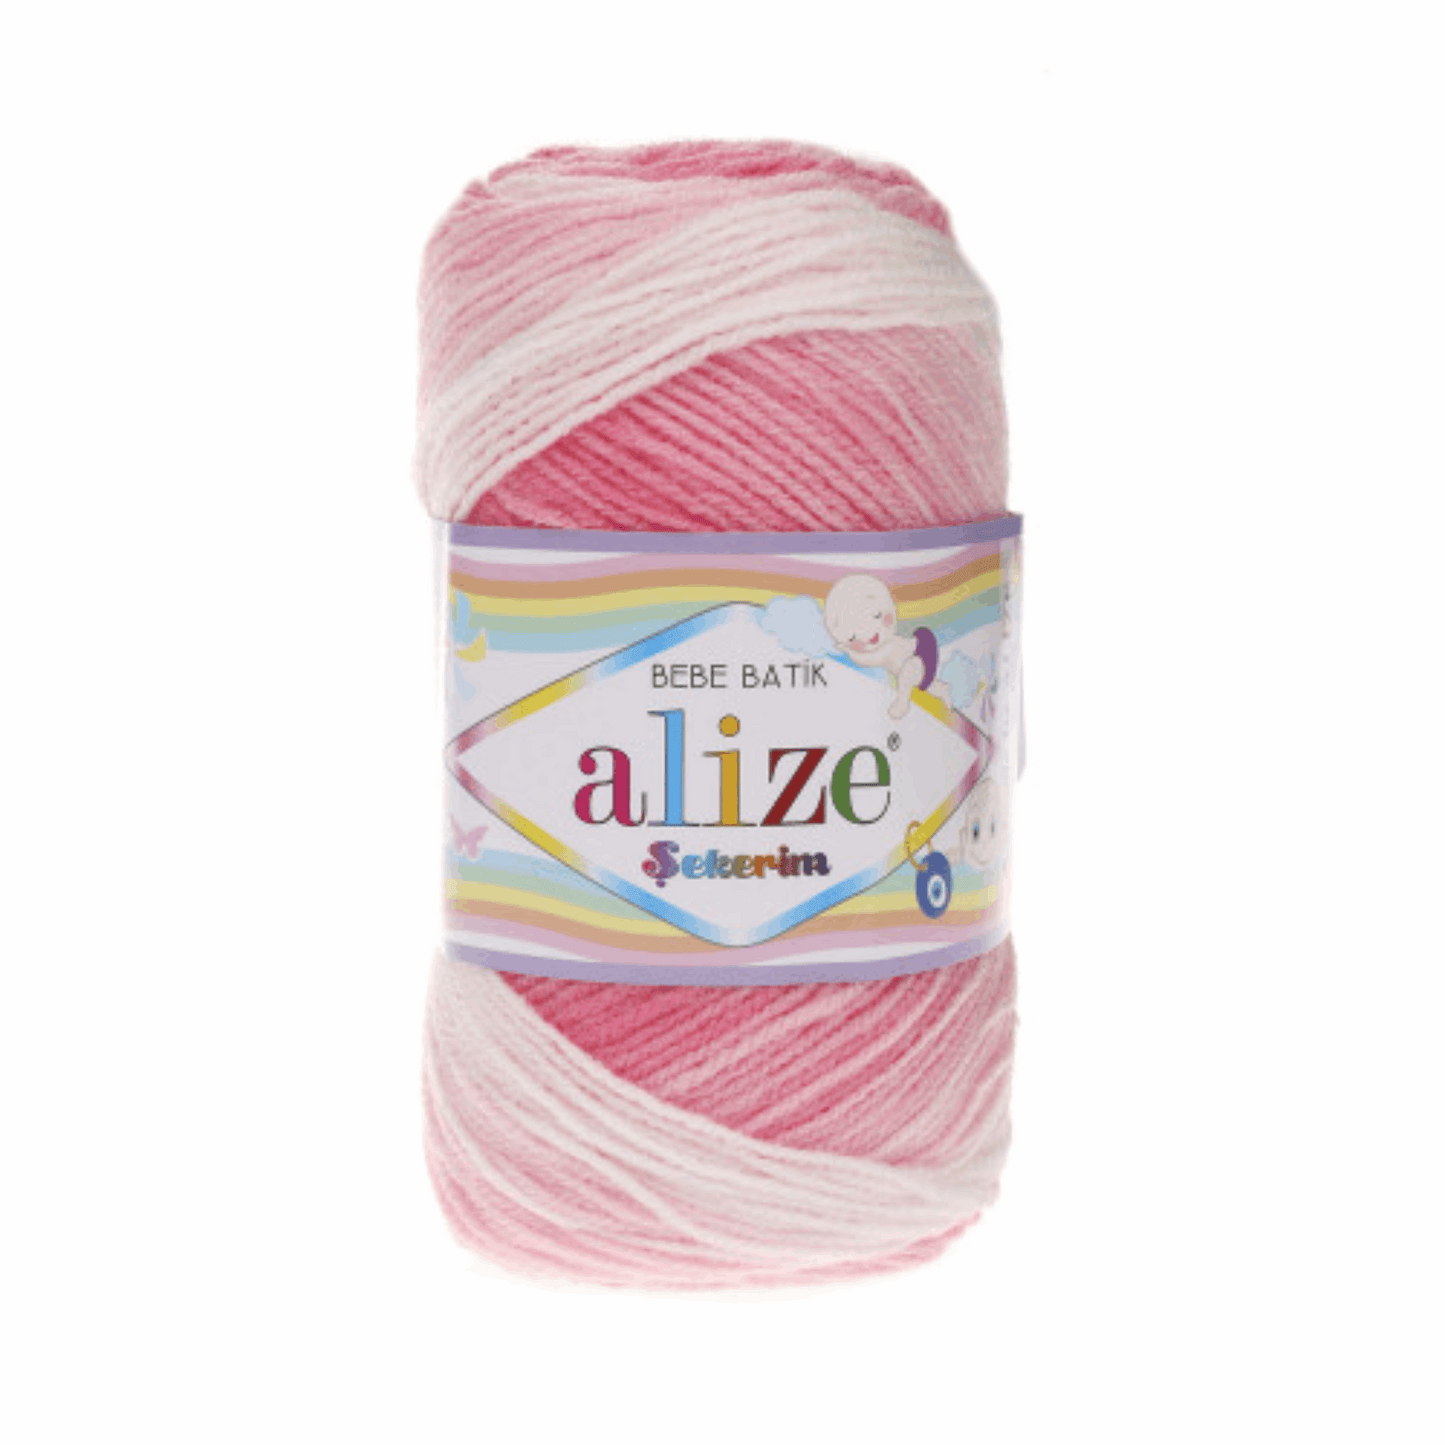 Alize Sekerim Baby Batik, color white pink 2126